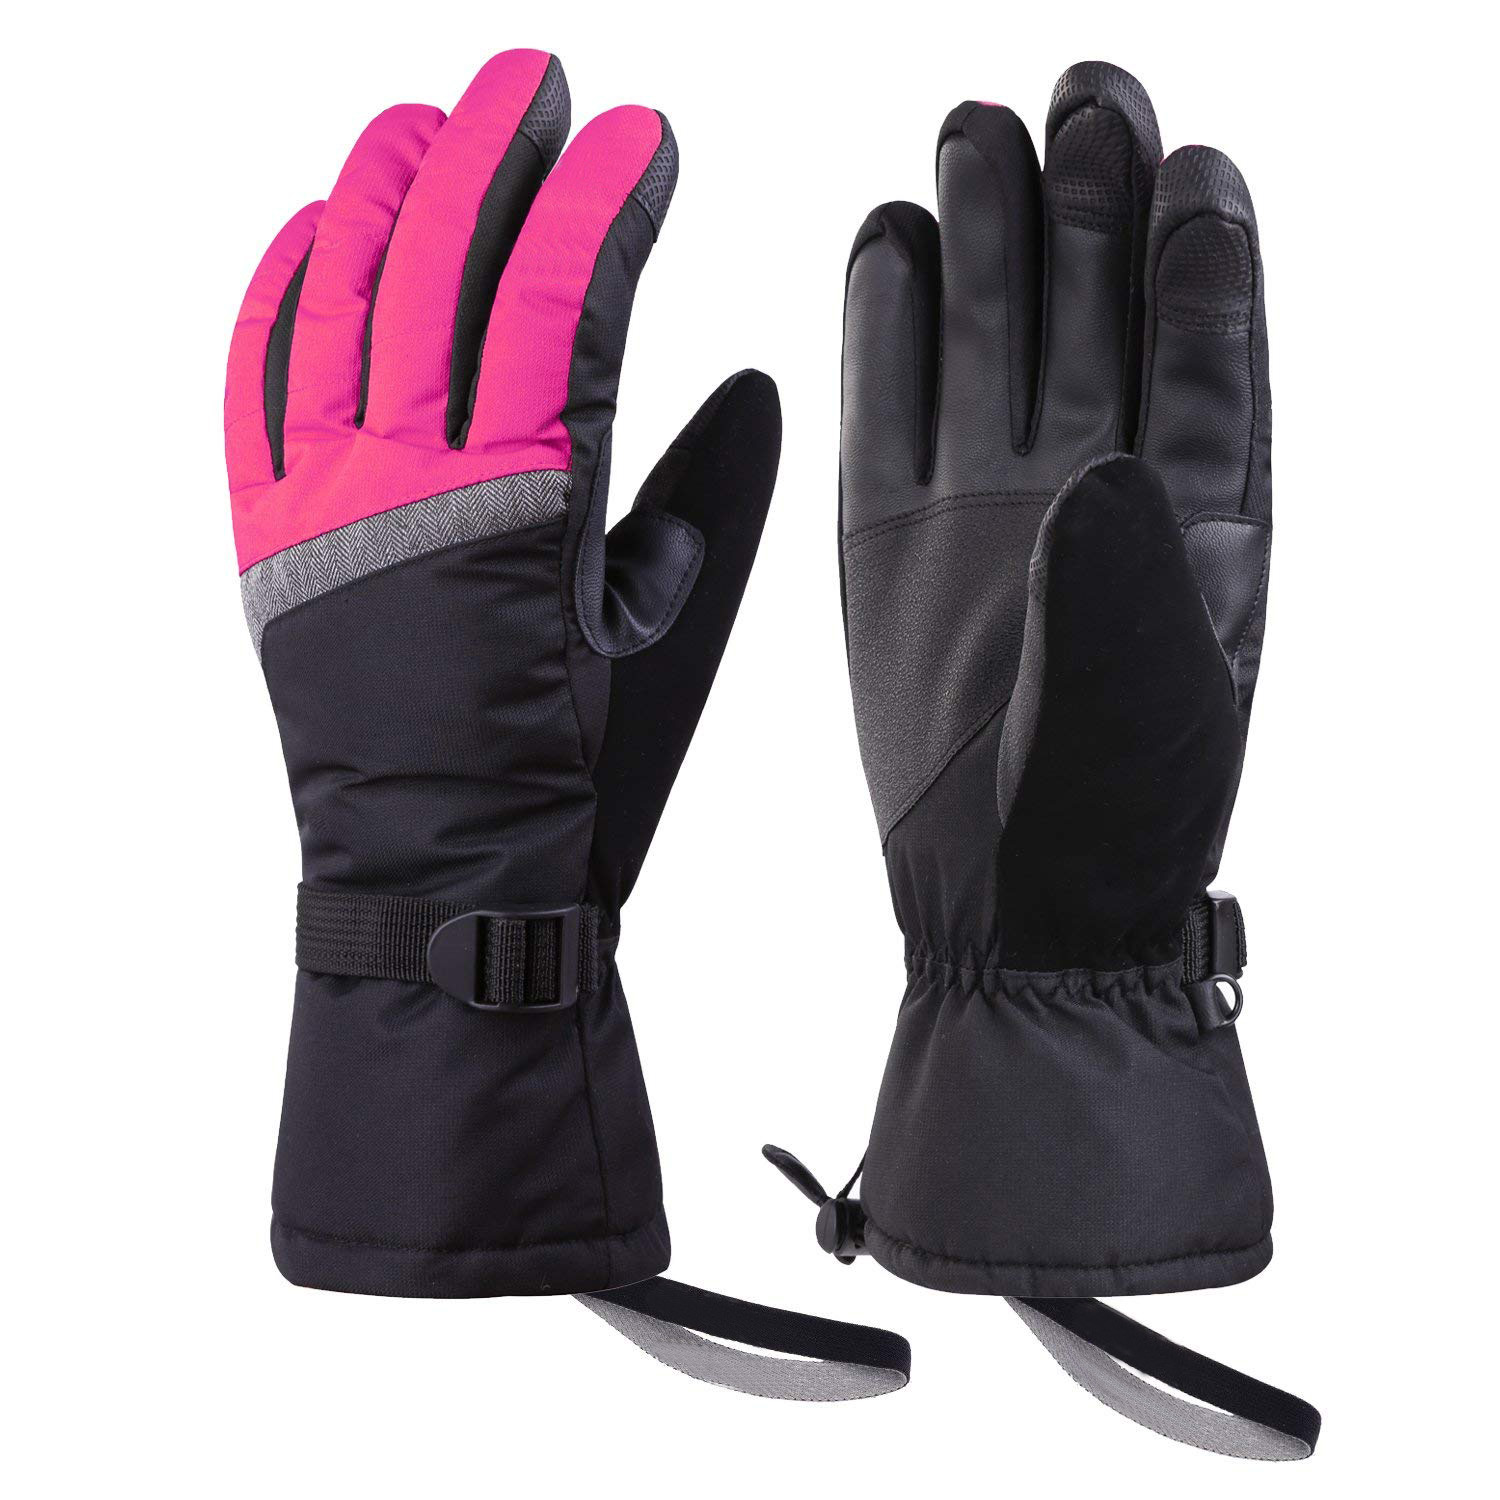 Ski Gloves Winter Waterproof Snowboard Snow Thinsulate Warm Touchscreen Cold Weather Women SKI Glove